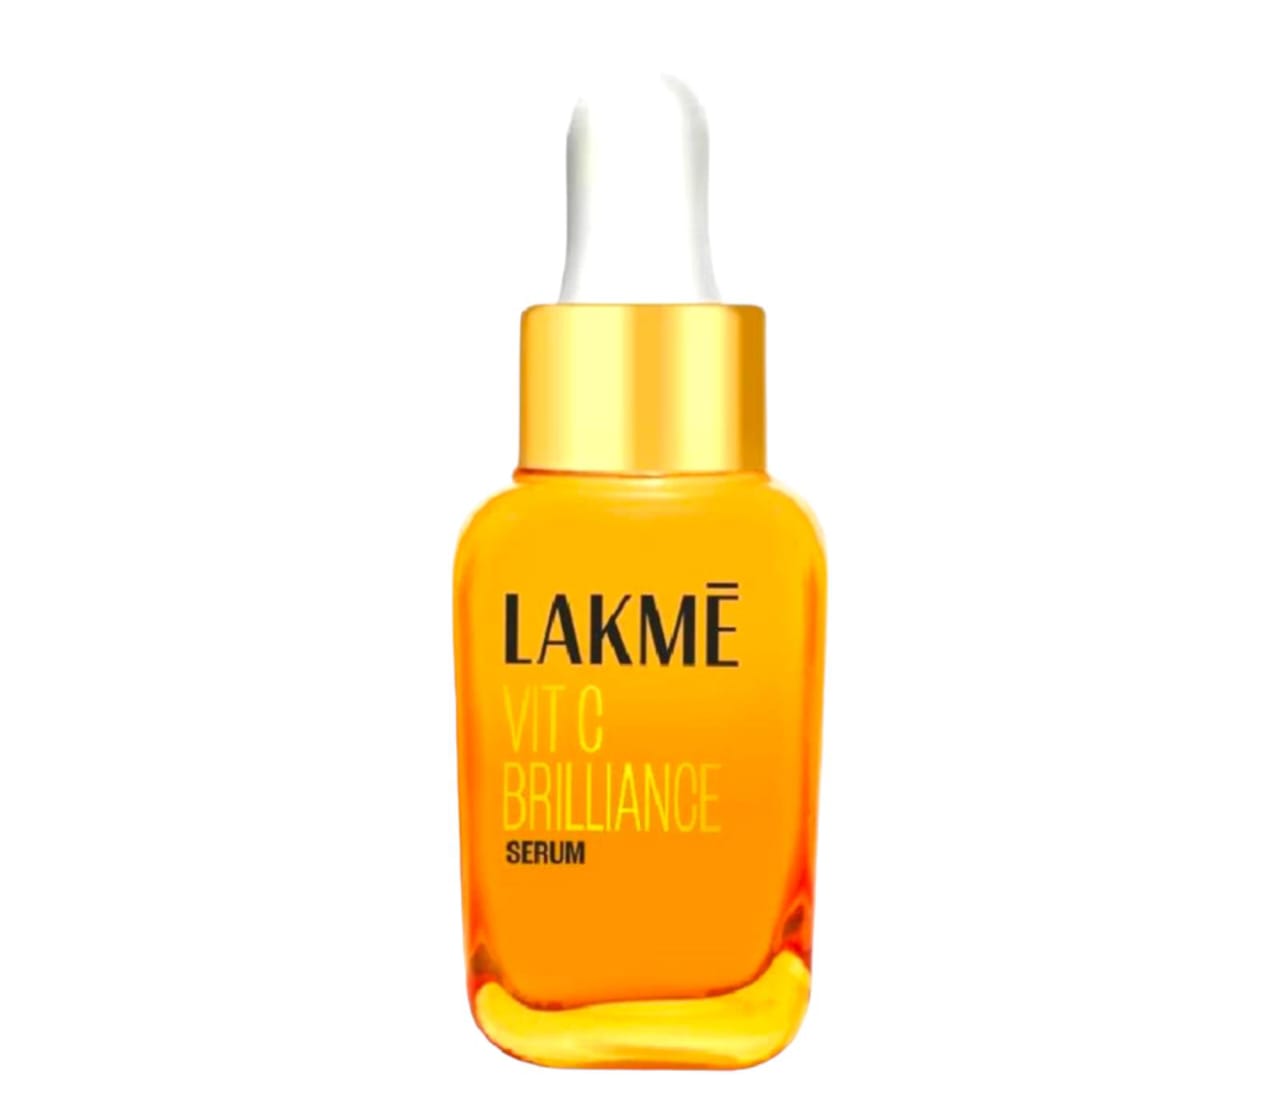 Lakme Skin ultimate collection Vit C Brilliance Serum